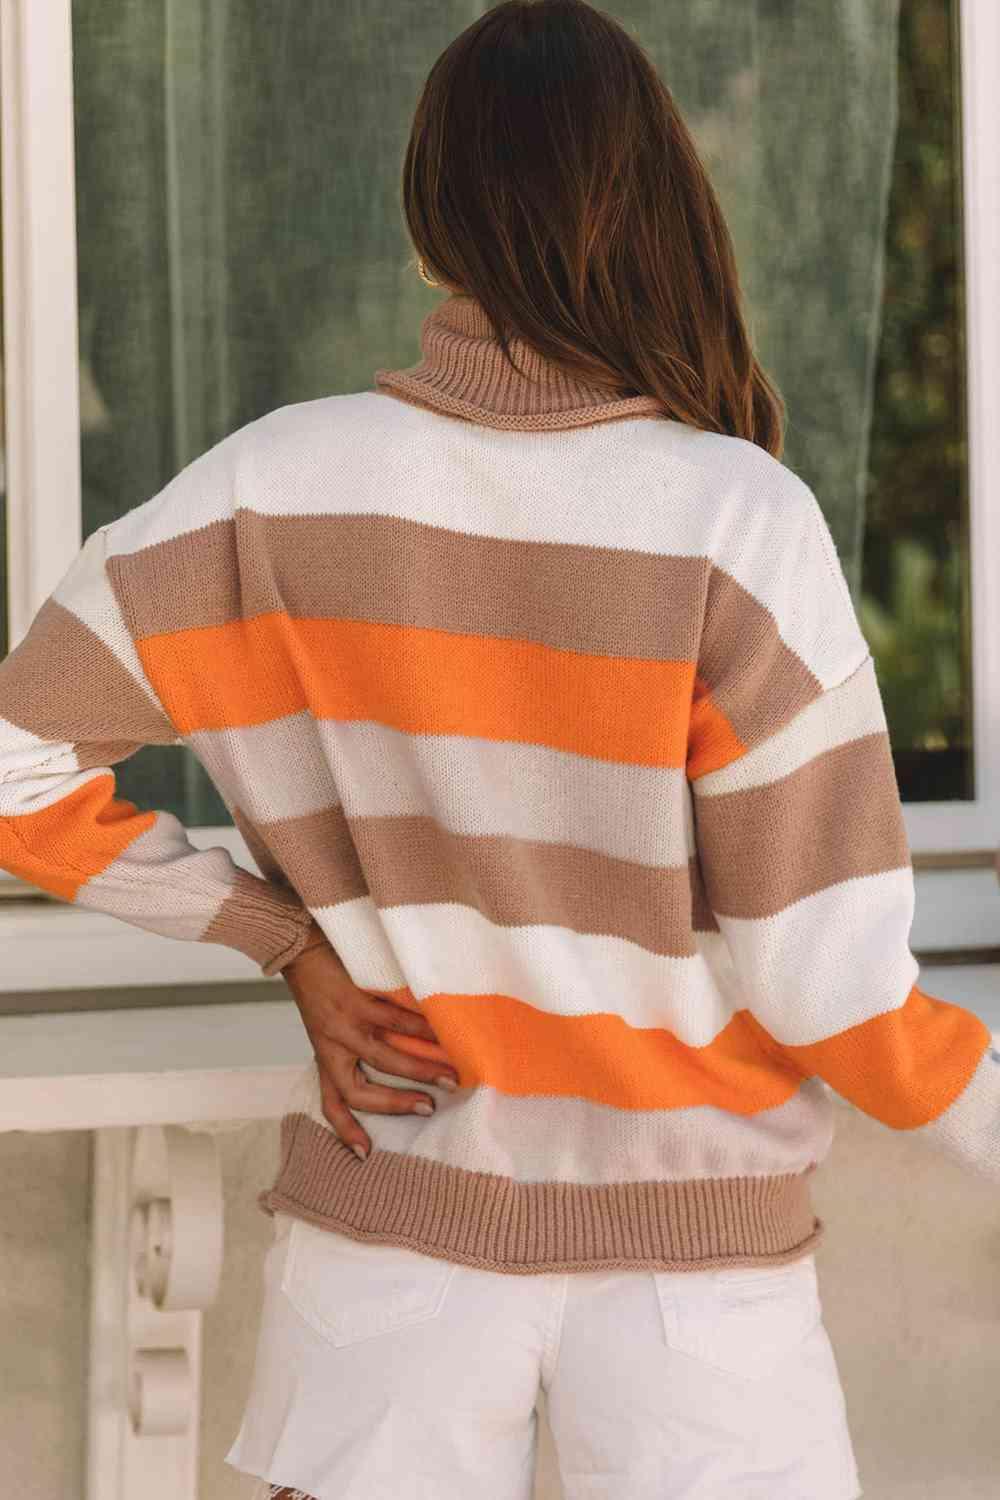 Snug Fit Turtle Neck Striped Sweater - MXSTUDIO.COM